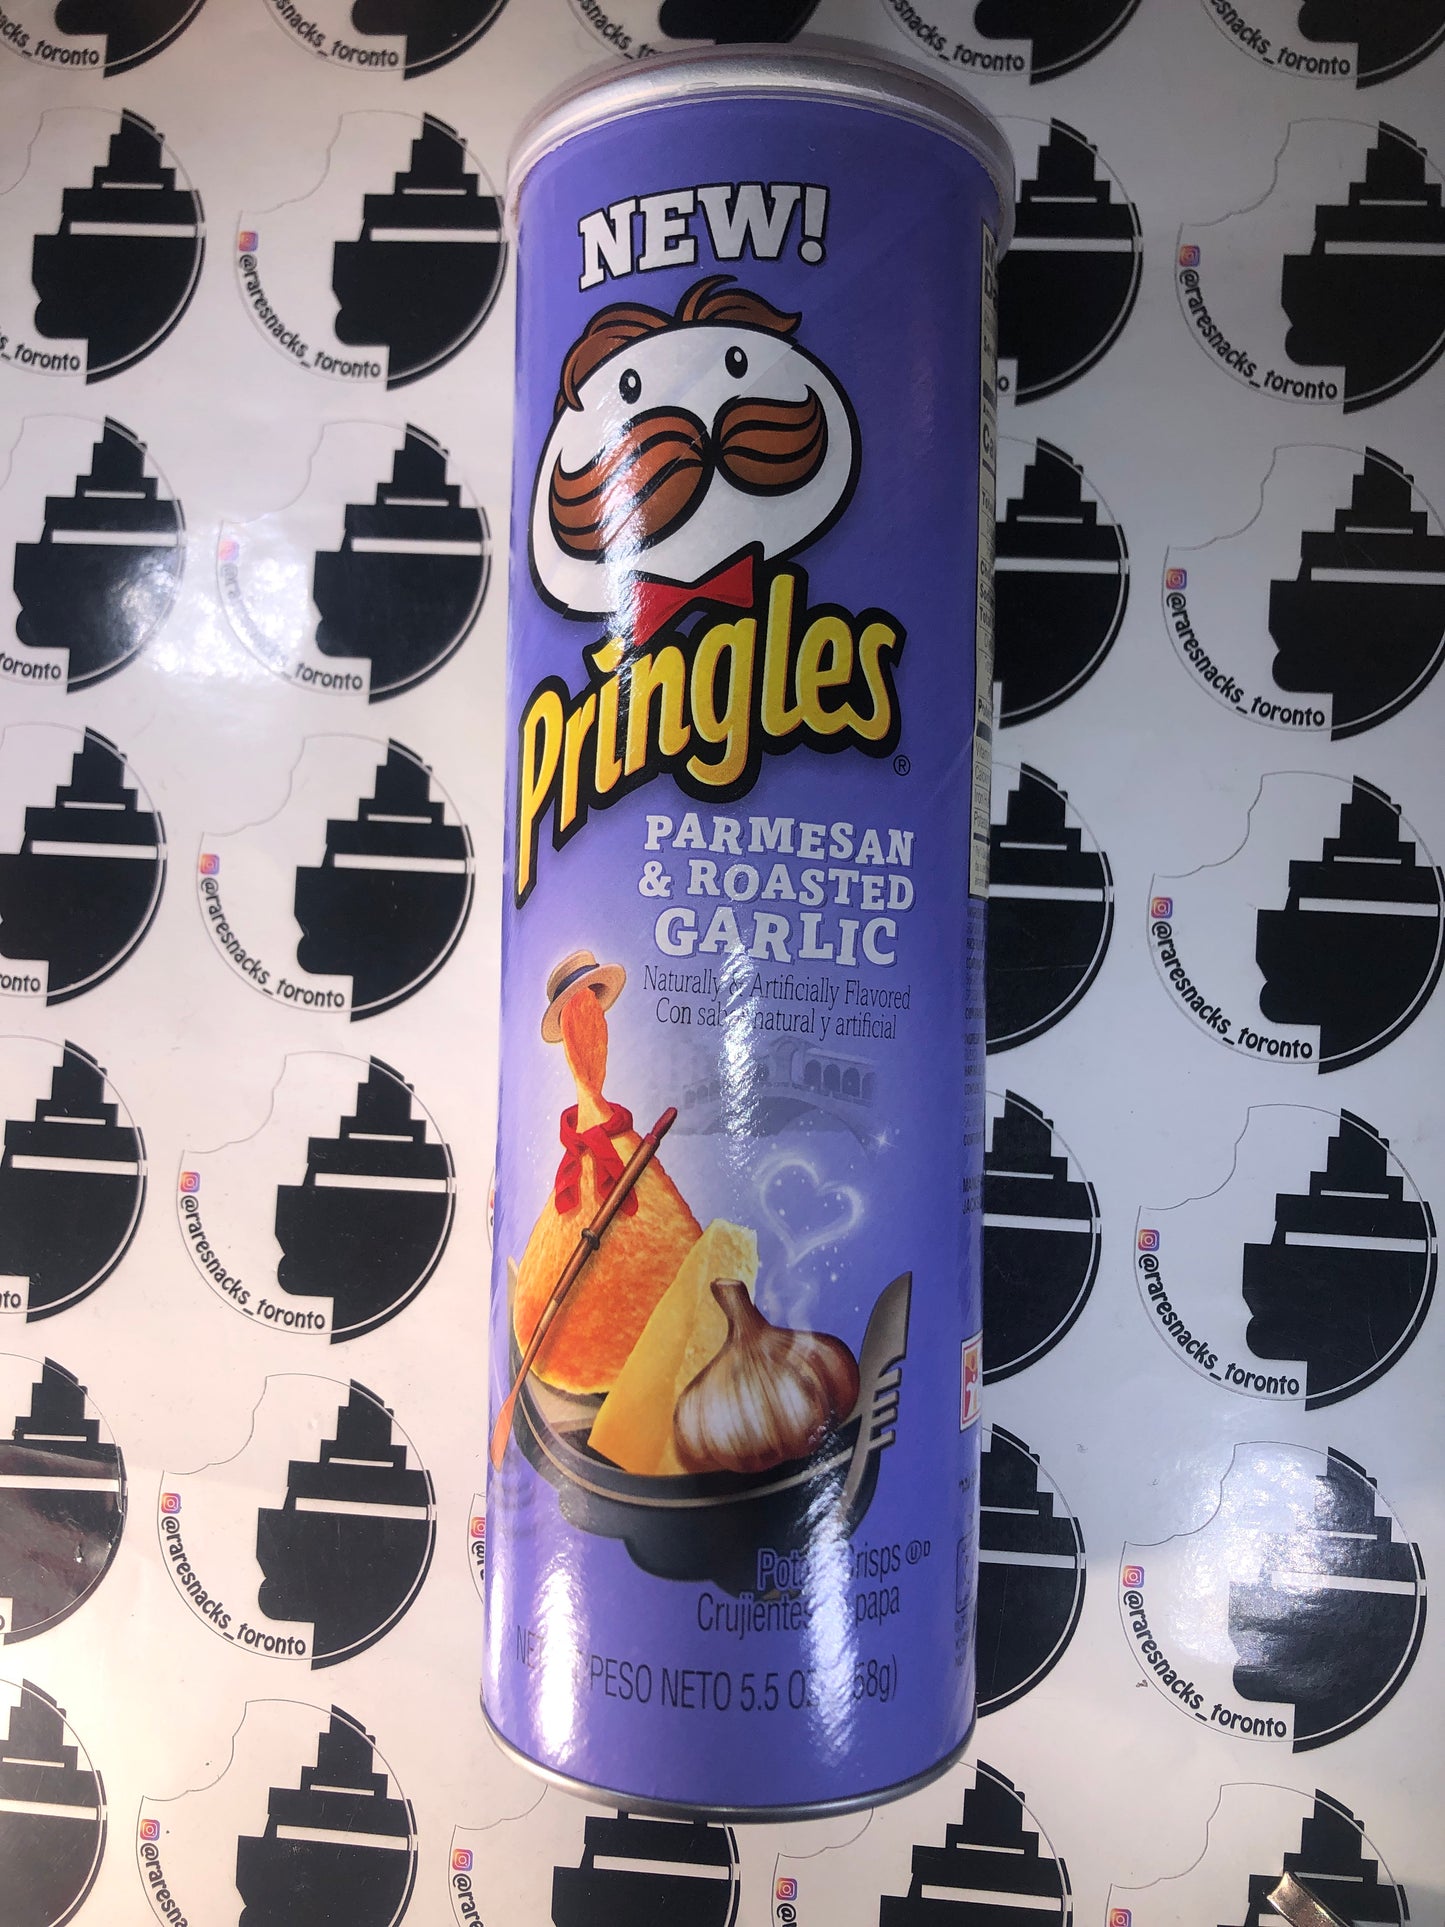 Pringle’s Parmesan & Roasted Garlic